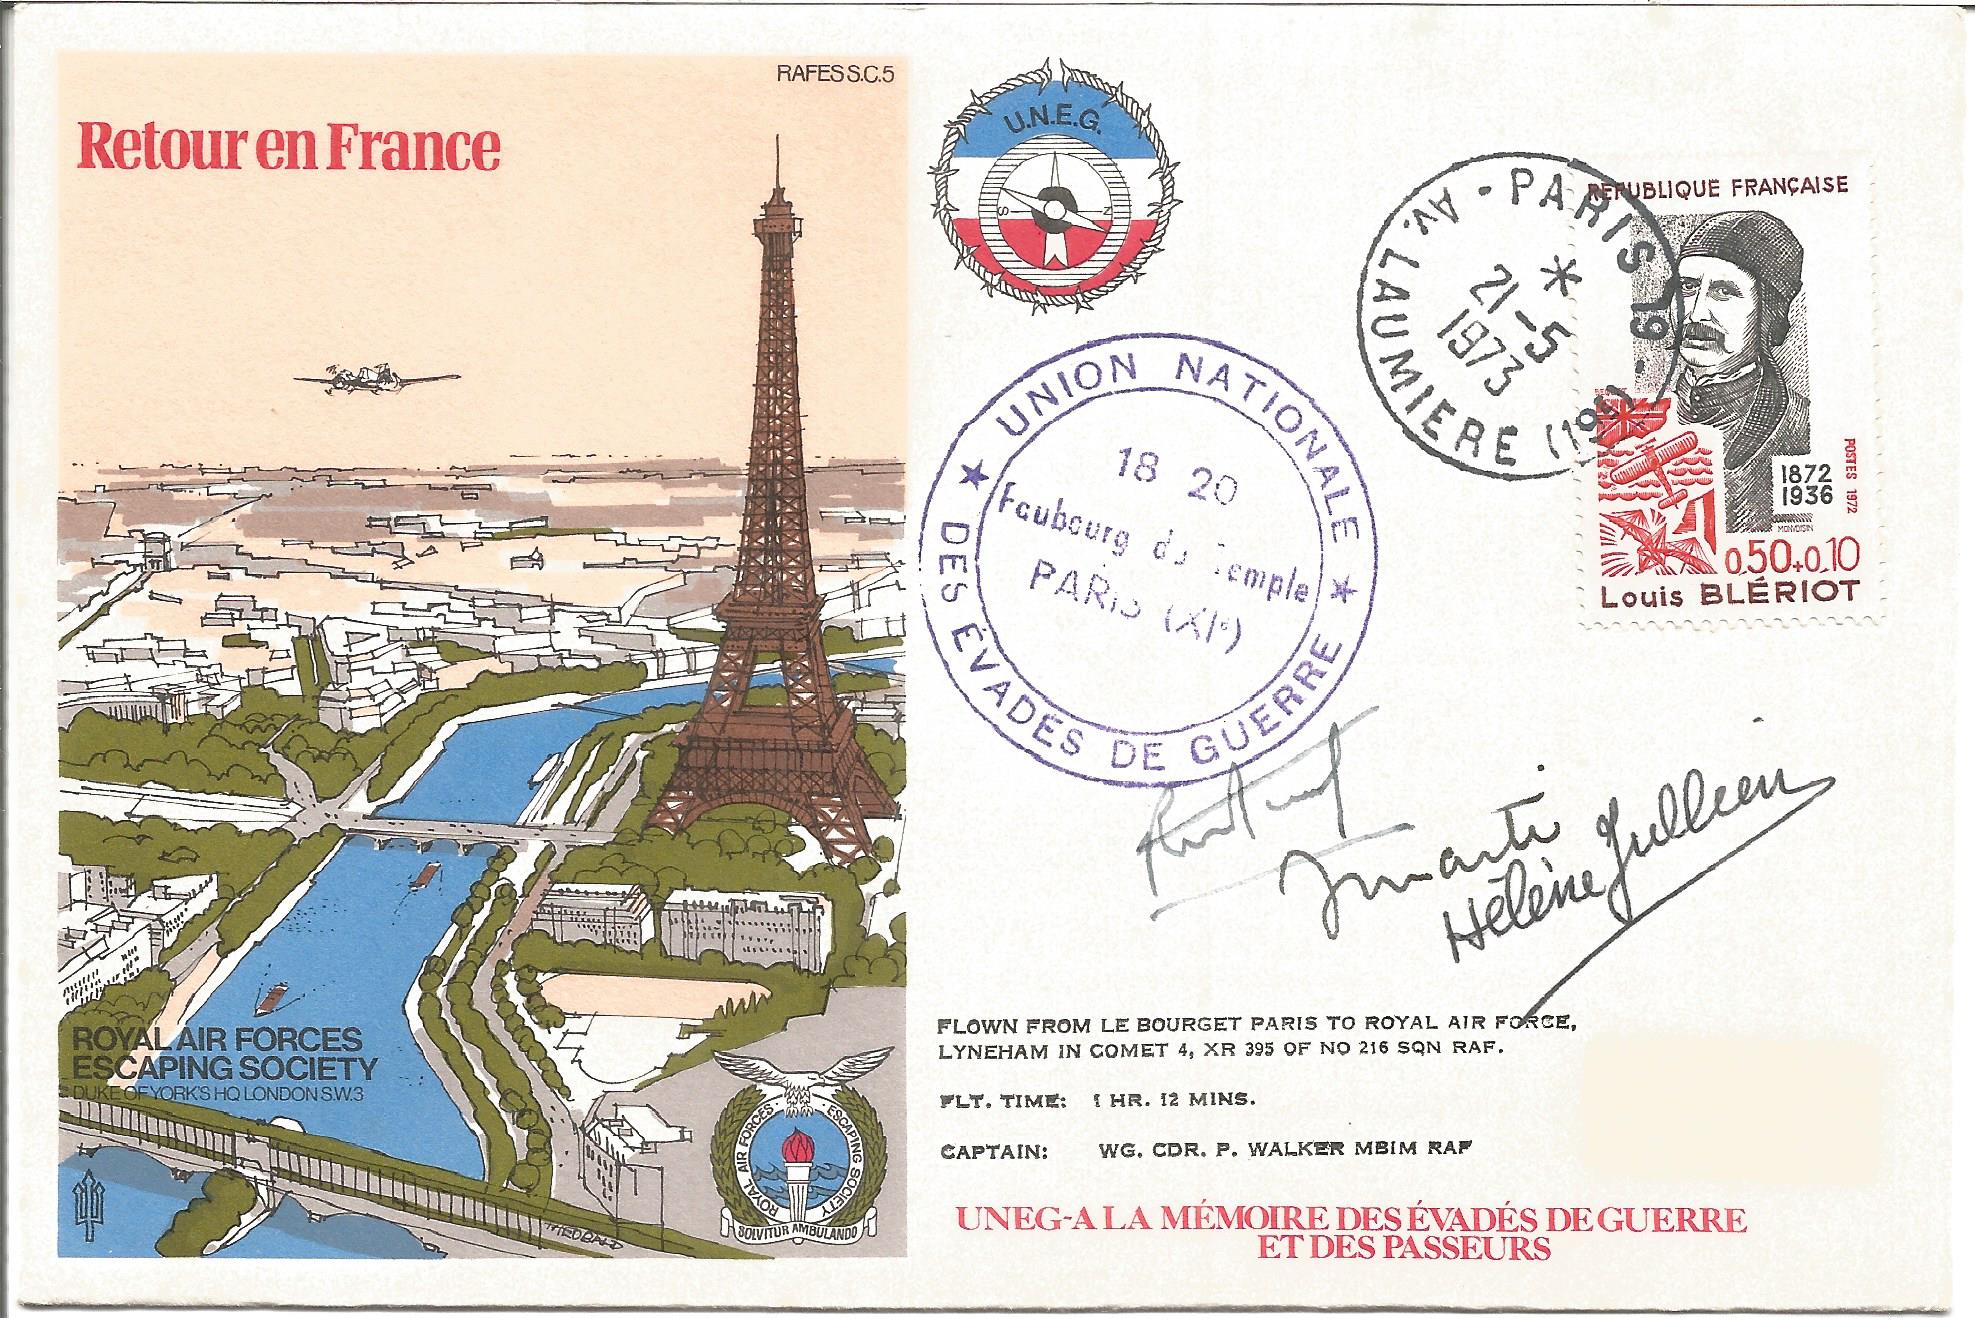 Retour en France R. A. F. E. S. signed RAF cover date stamp 21-5-1973. Flown from Le Bourget Paris